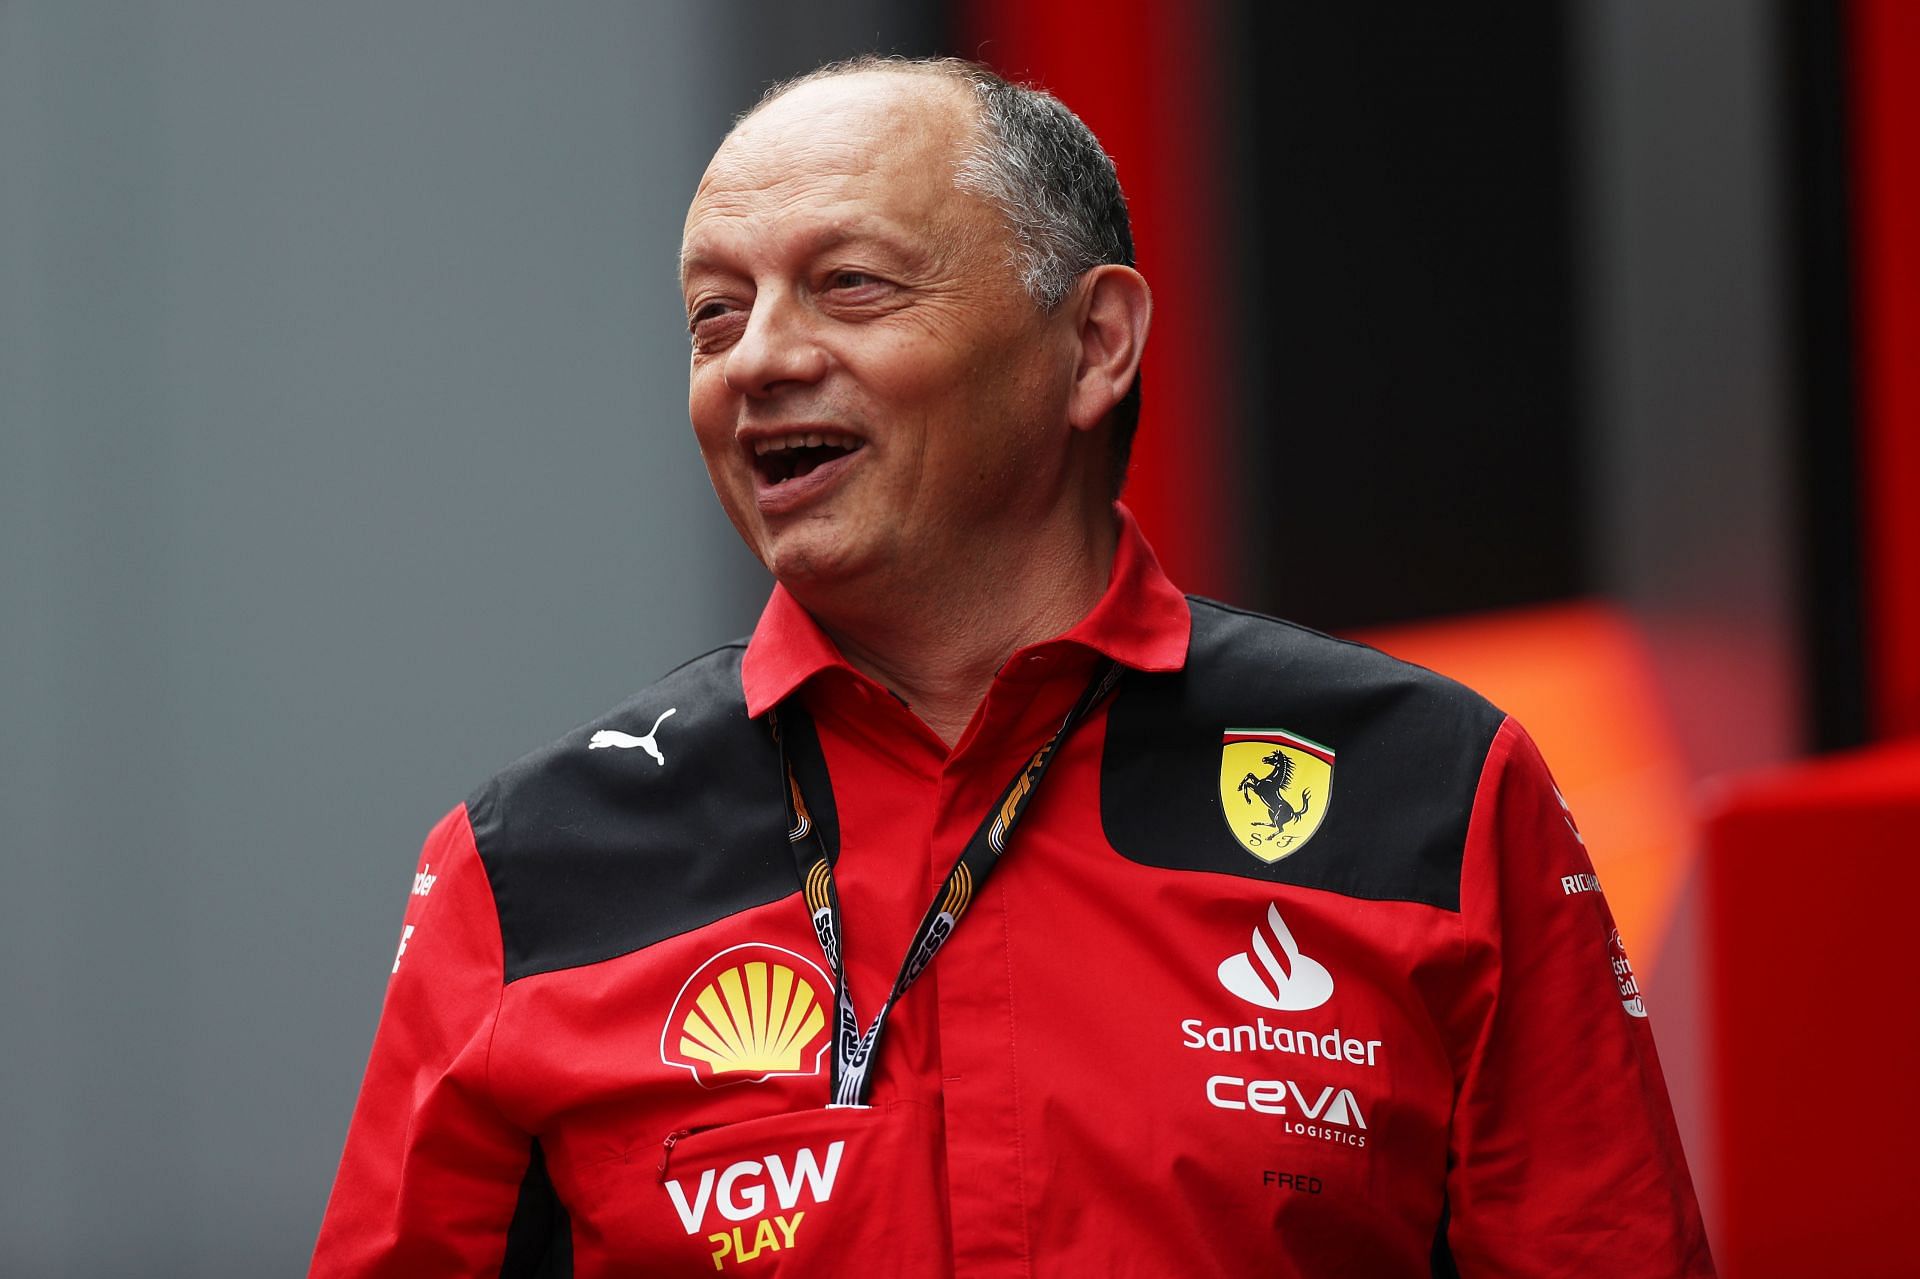 Despite F1 rivals’ upgrade plans, Ferrari team principal undeterred ...